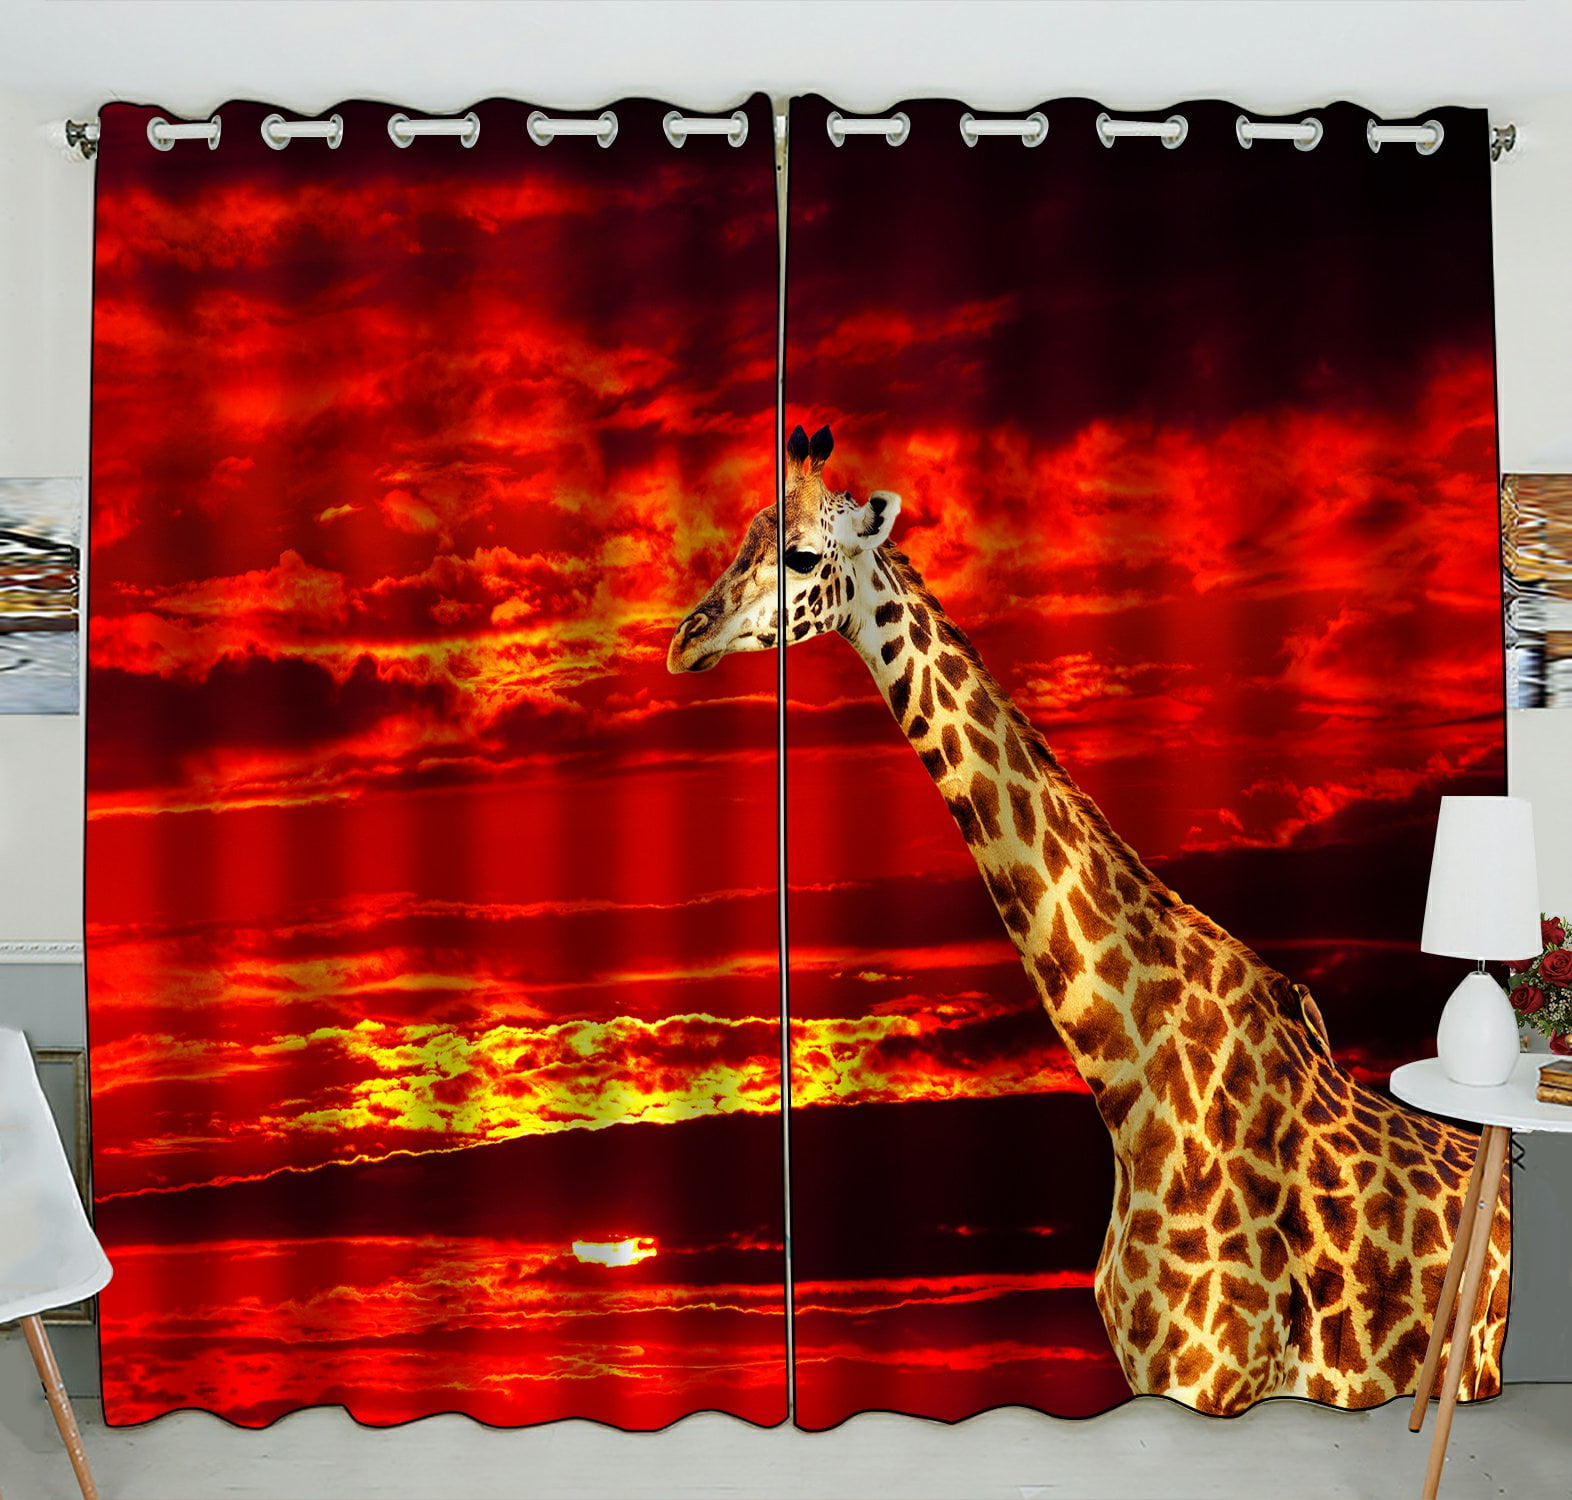 PHFZK Wild African Safari Window Curtain, Animal Giraffe against Red